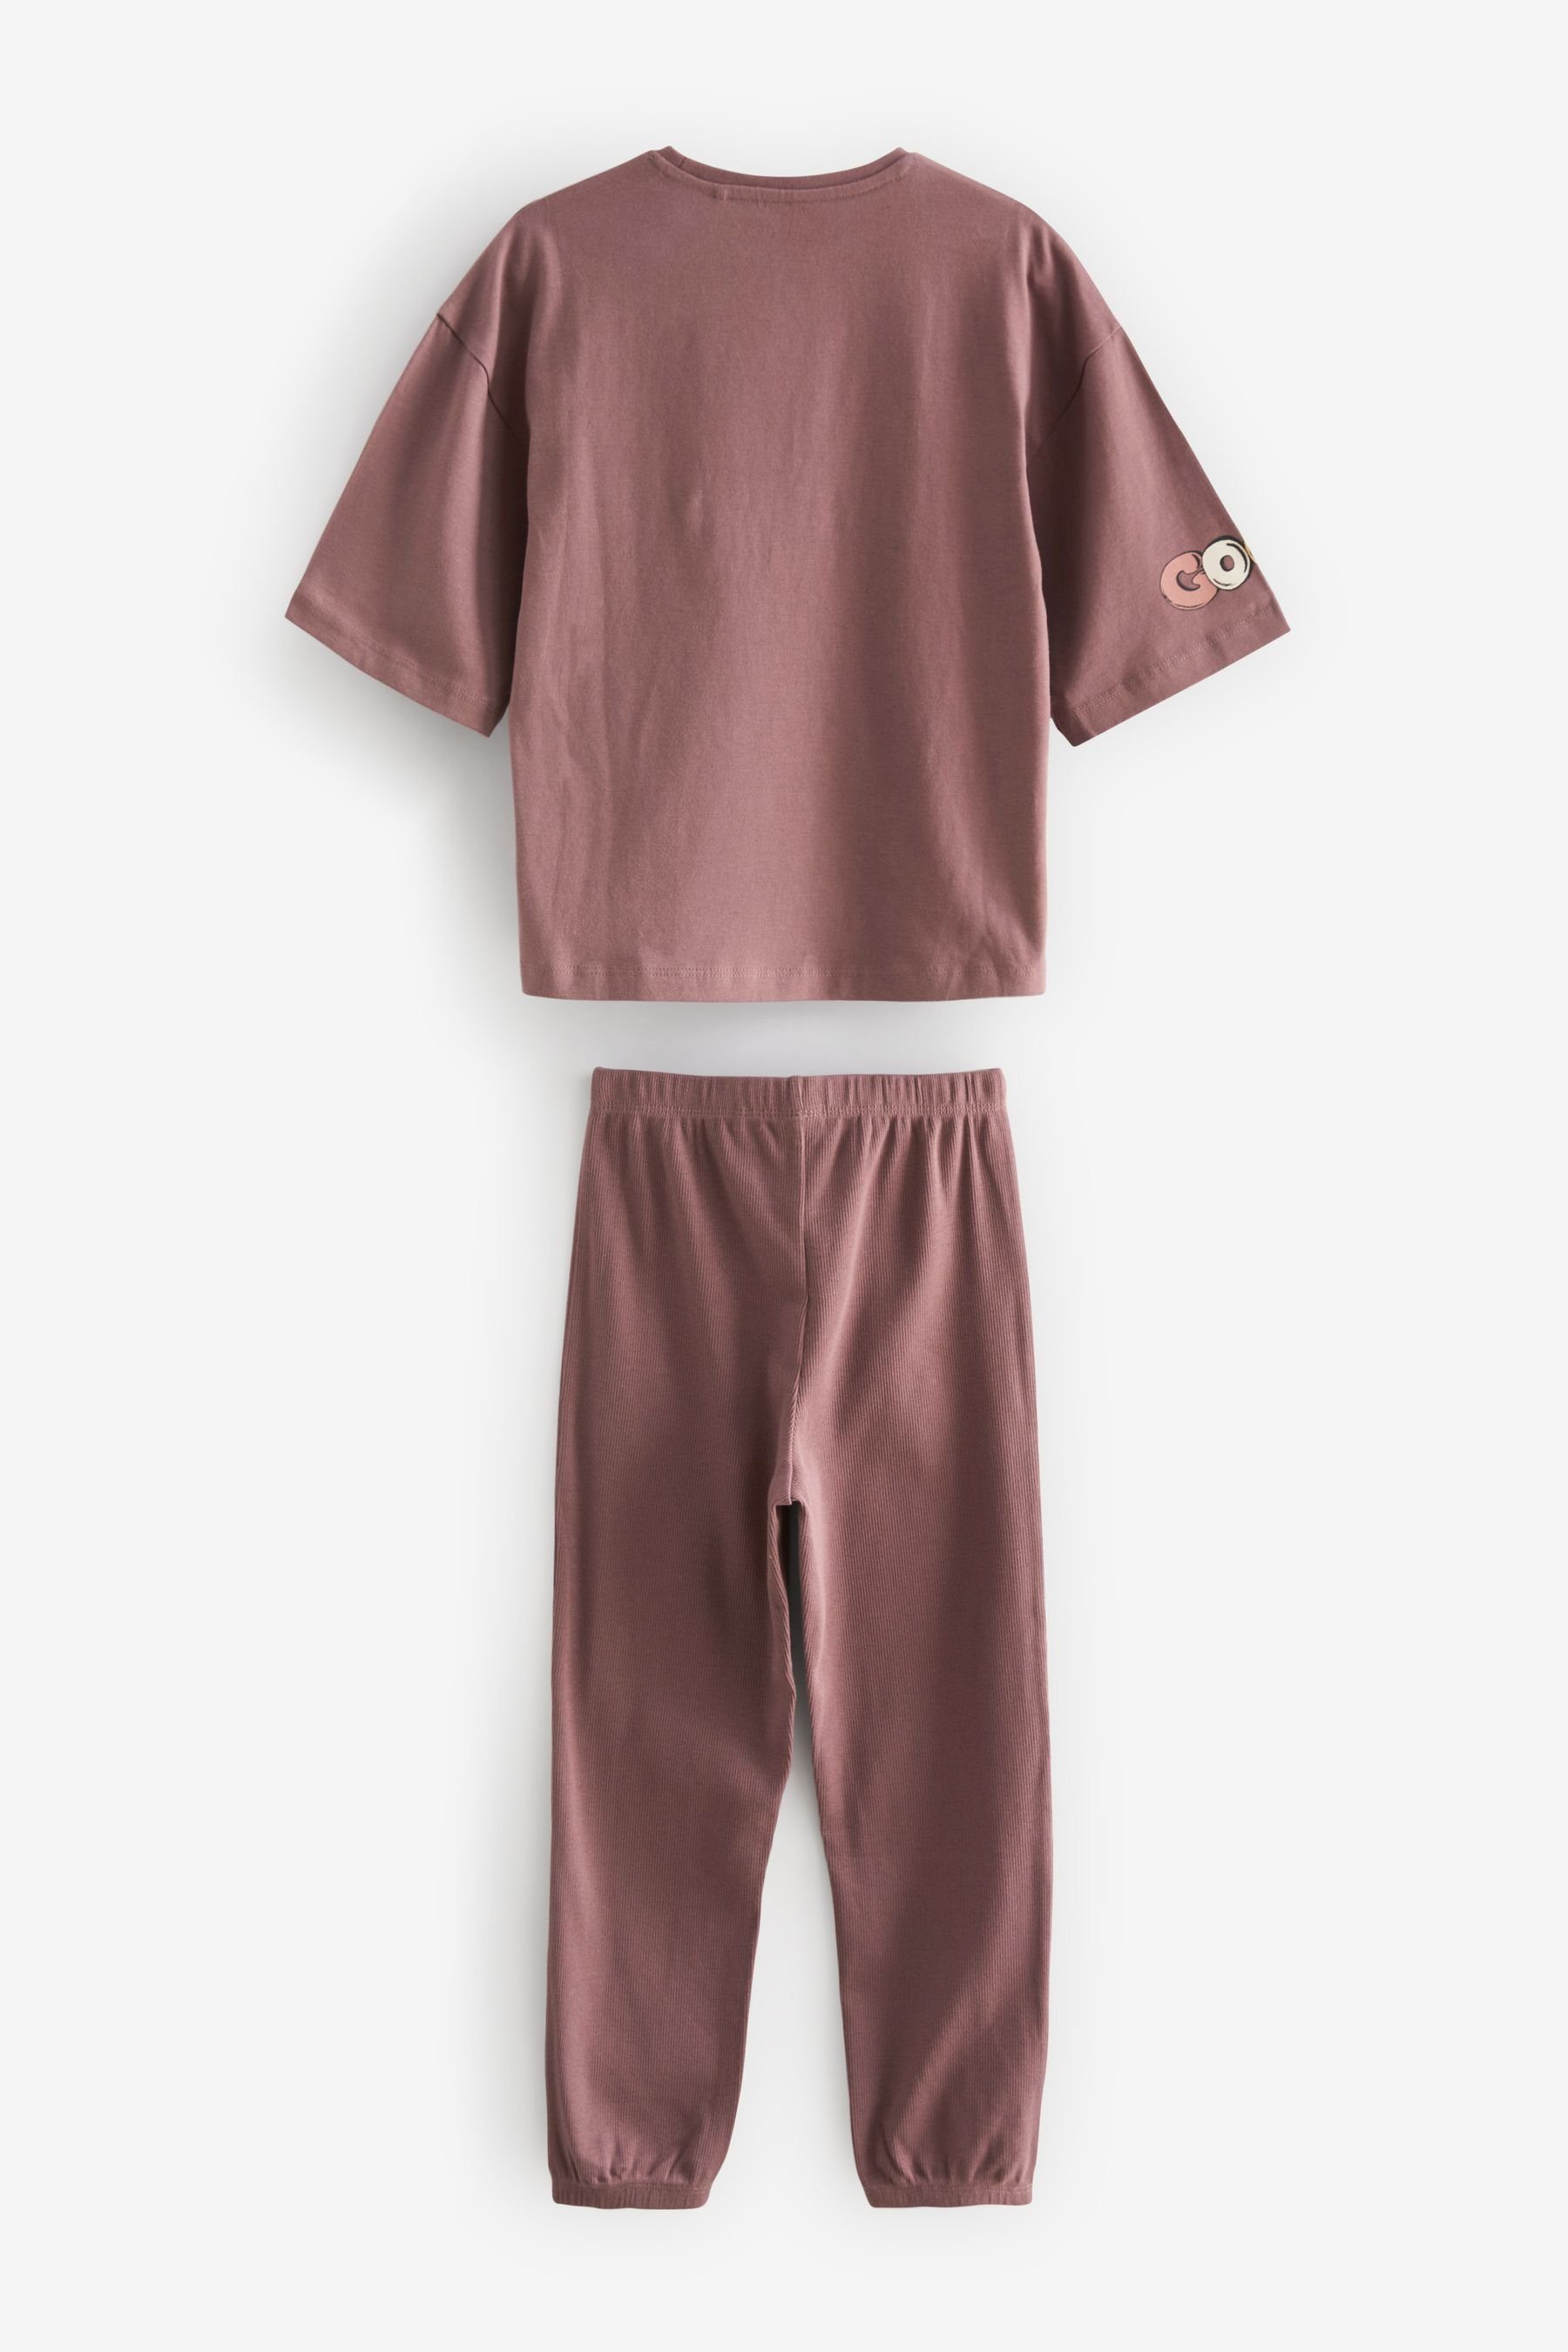 tlg) Grafikmuster mit Next Pyjamas Pyjama (2 Jogginghose